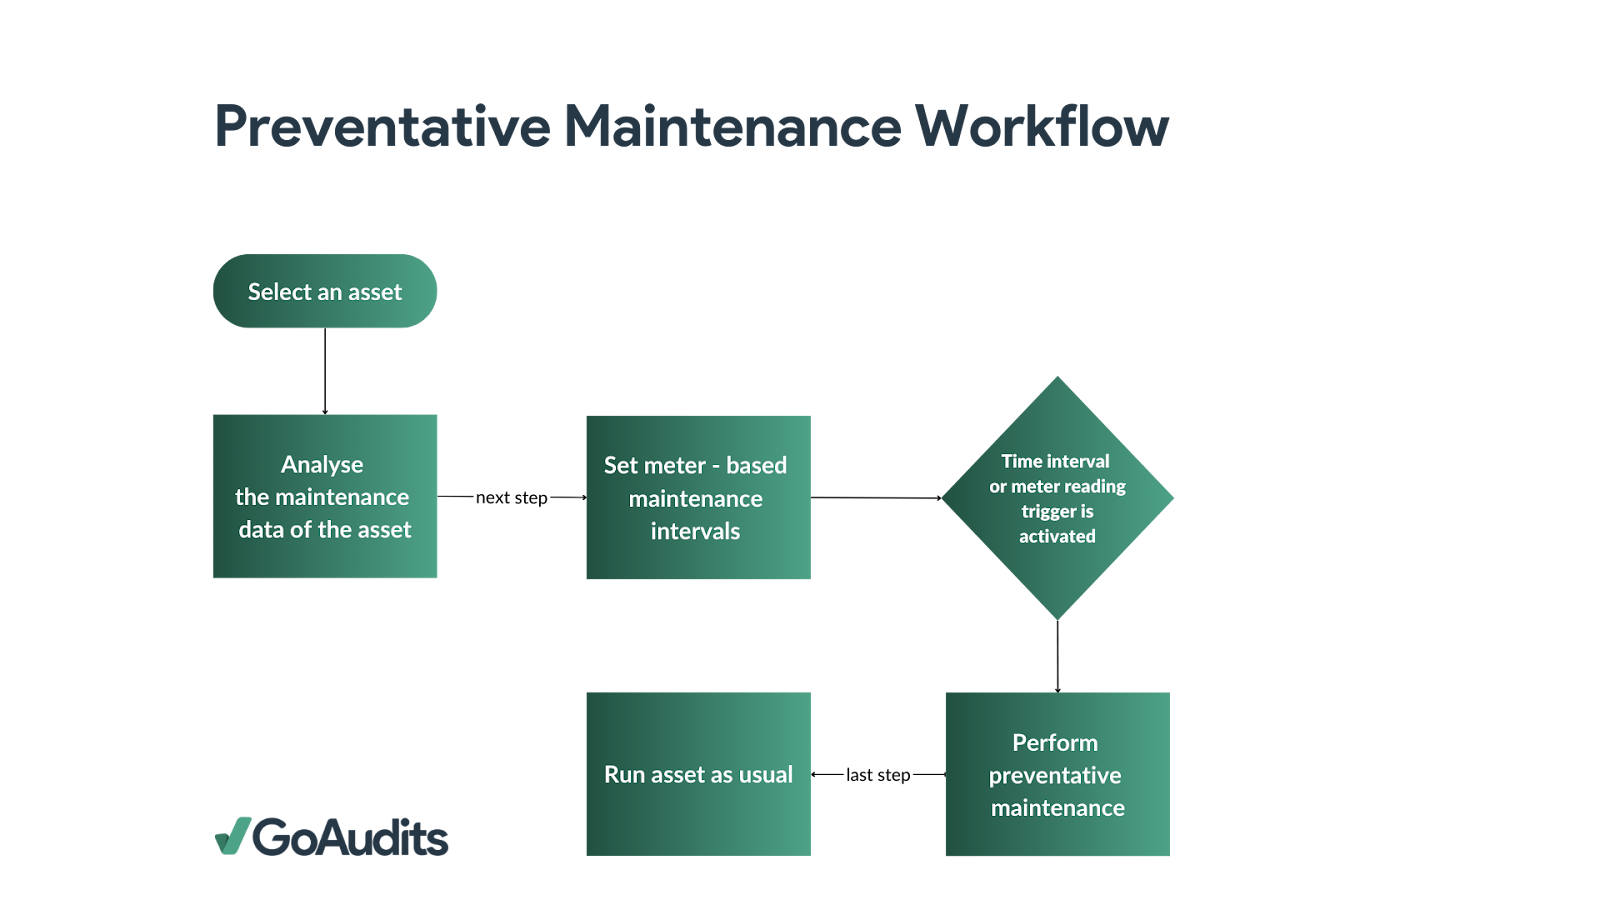 Preventative Maintenance workflow - GoAudits - Planned Maintenance blog post image 